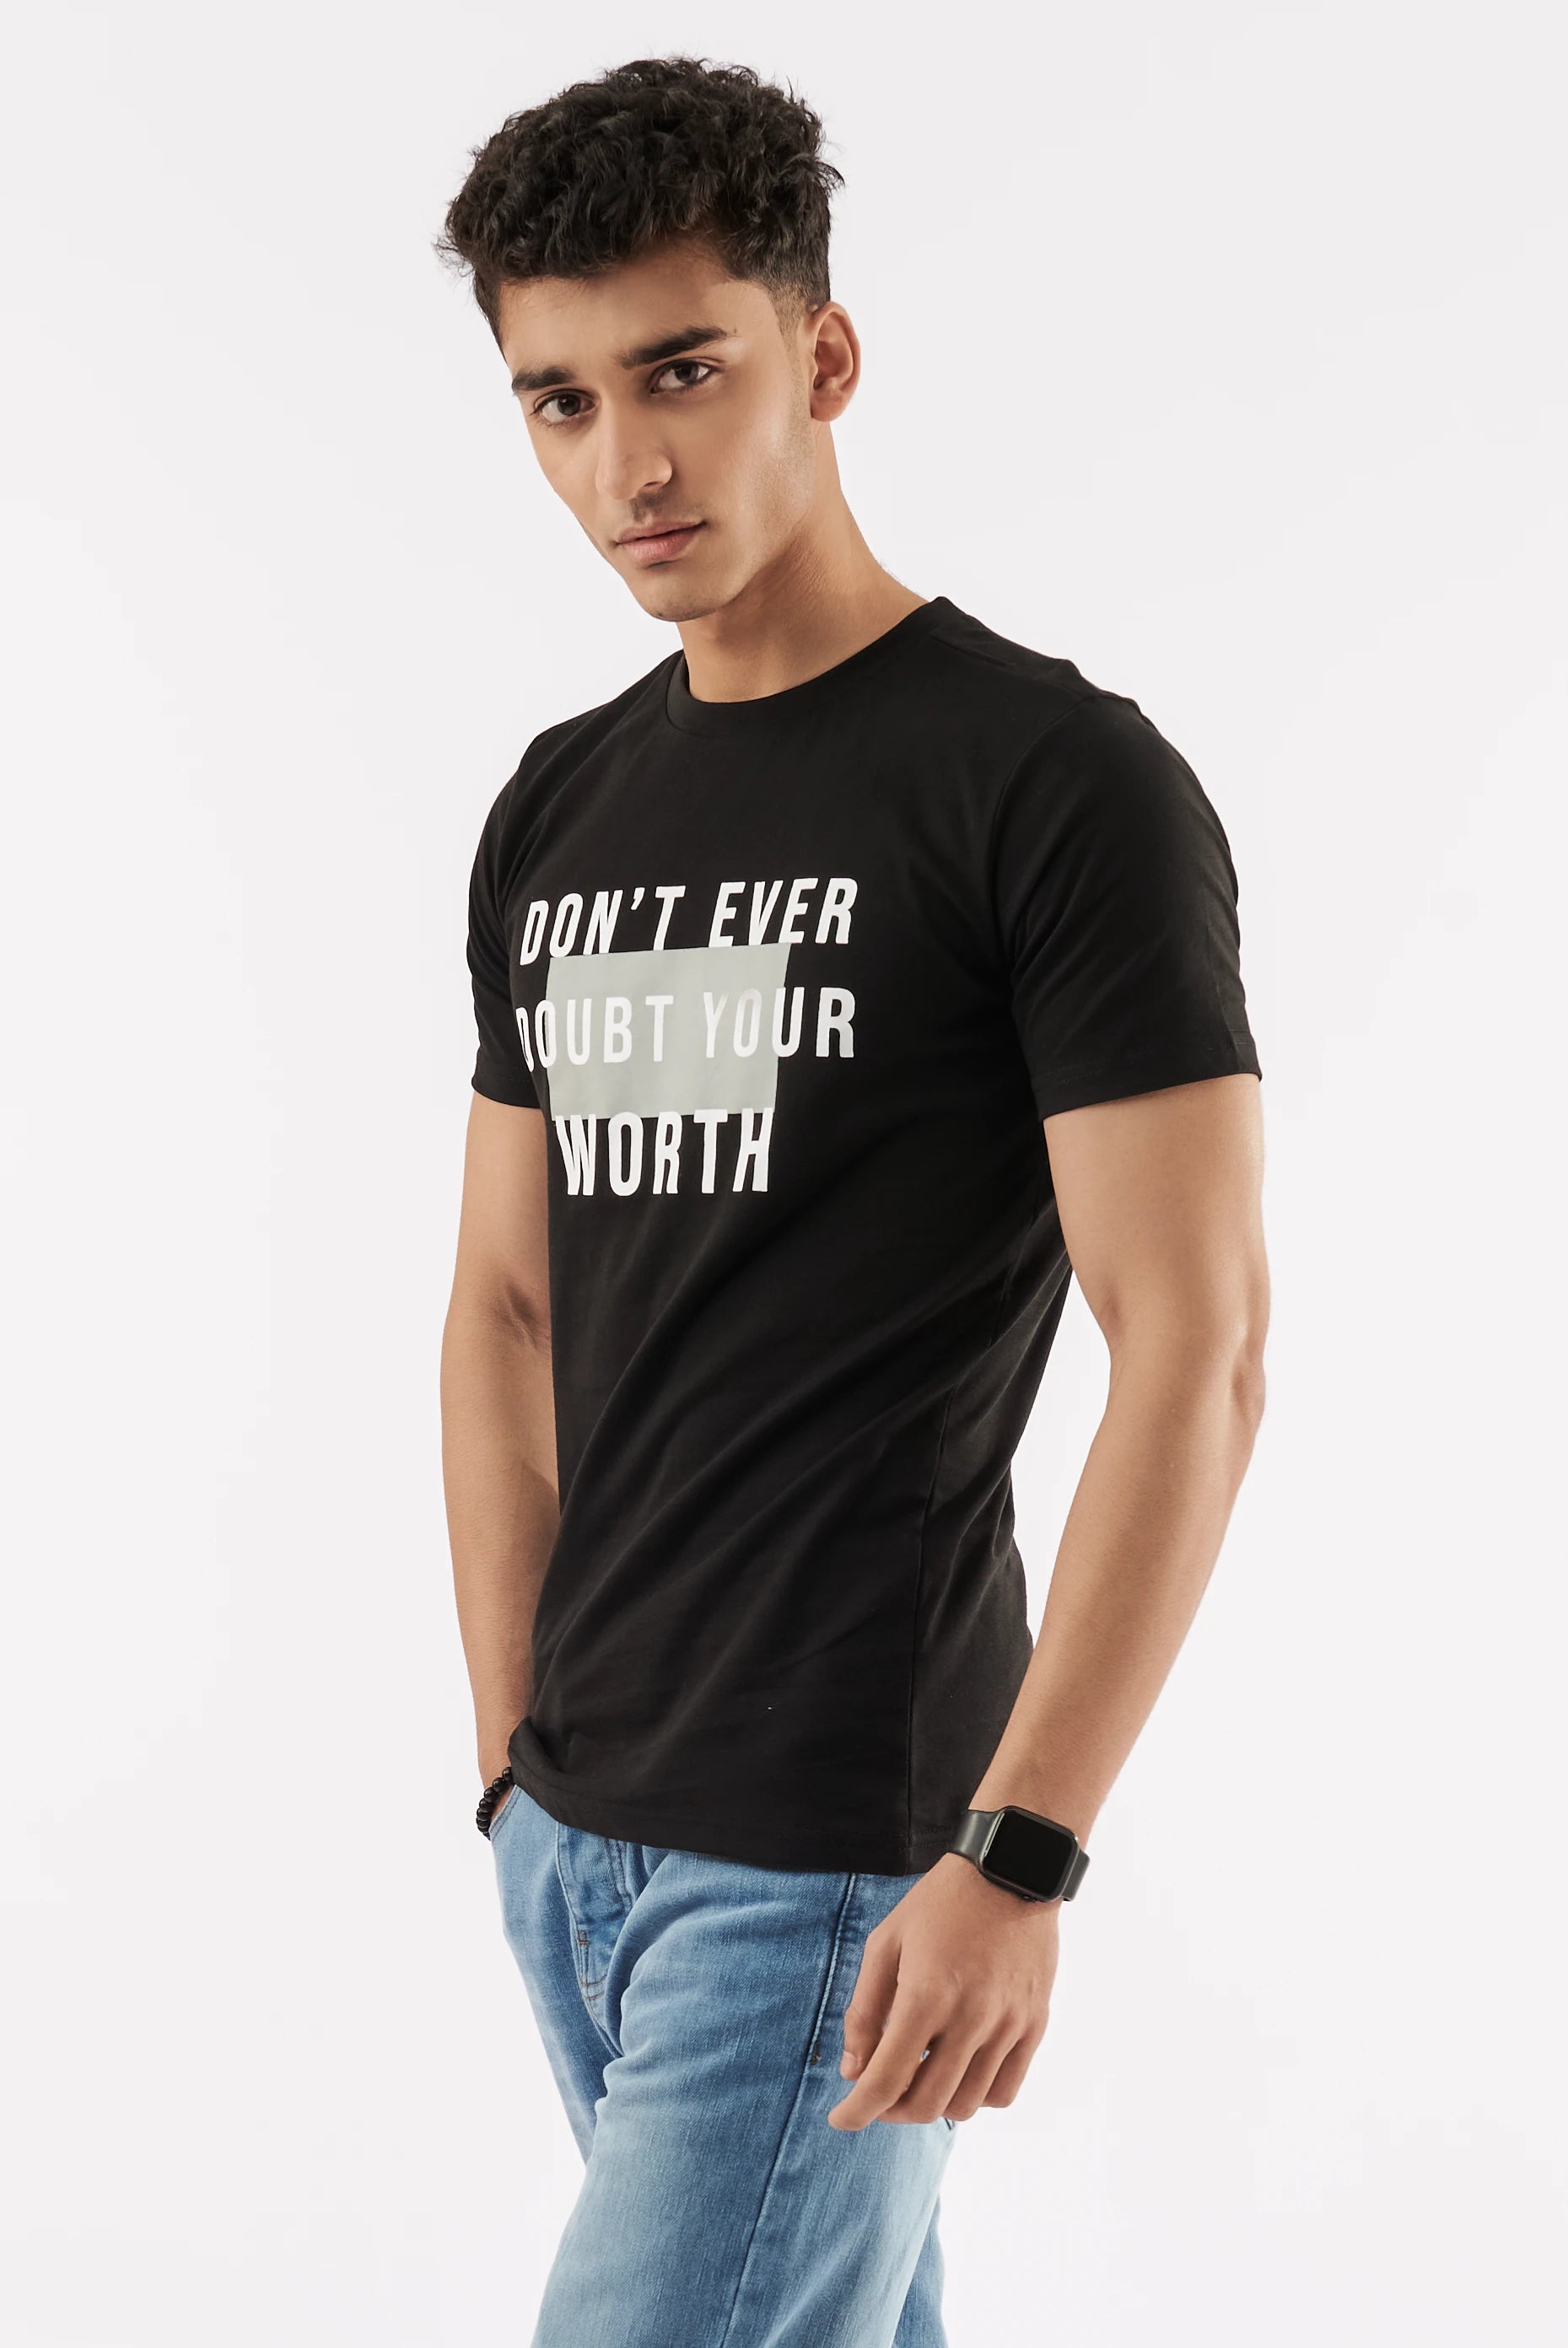 Men's Statement T-Shirt Black